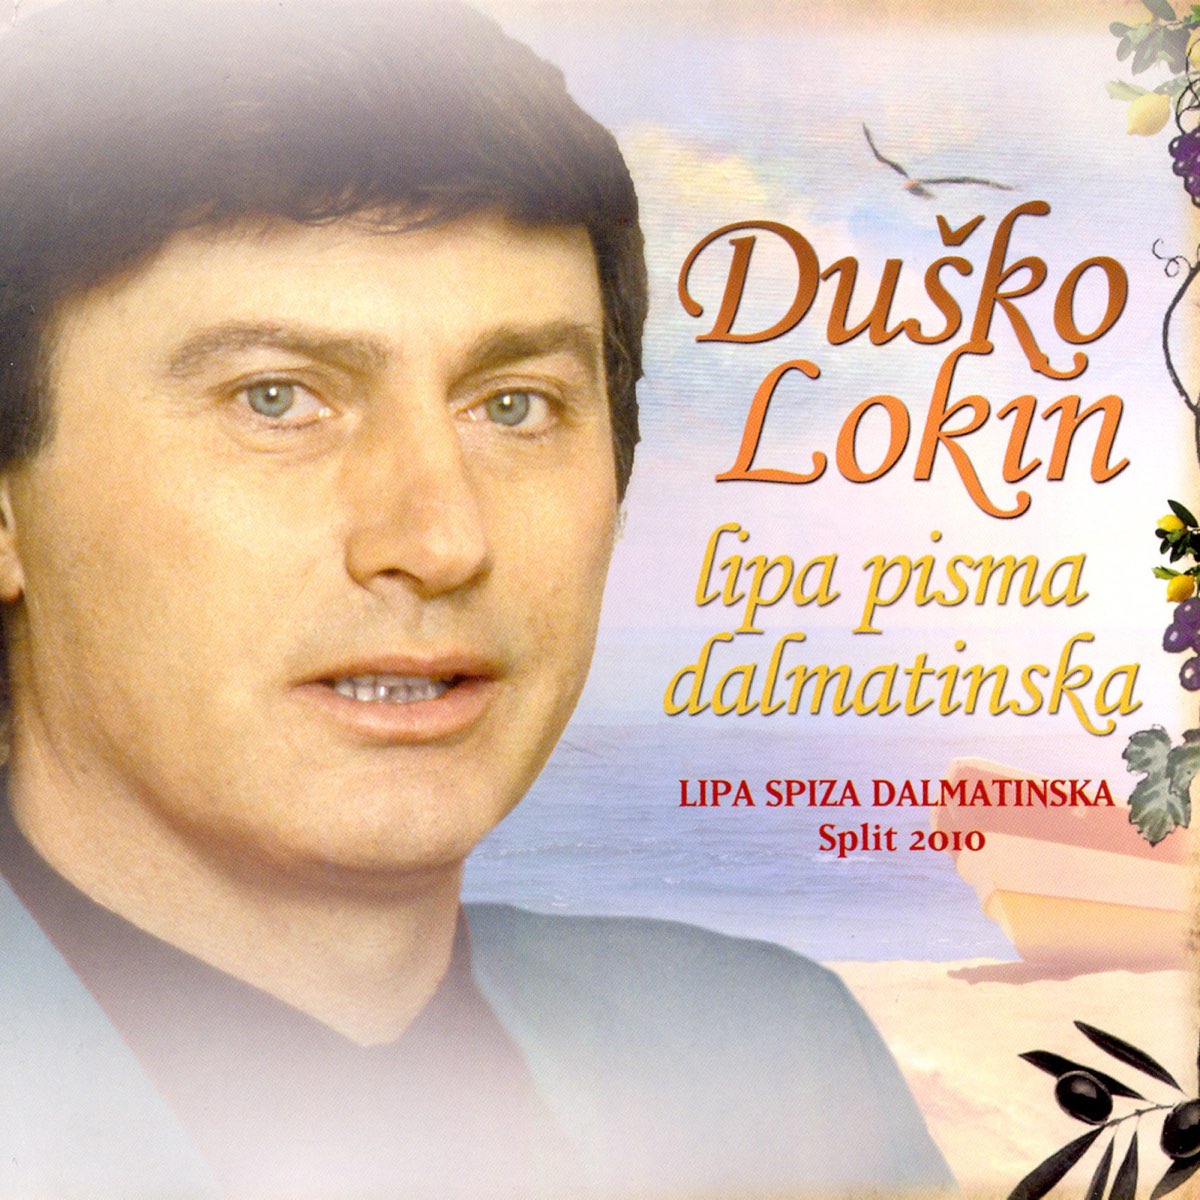 Lipa Pisma Dalmatinska by Duško Lokin on Apple Music